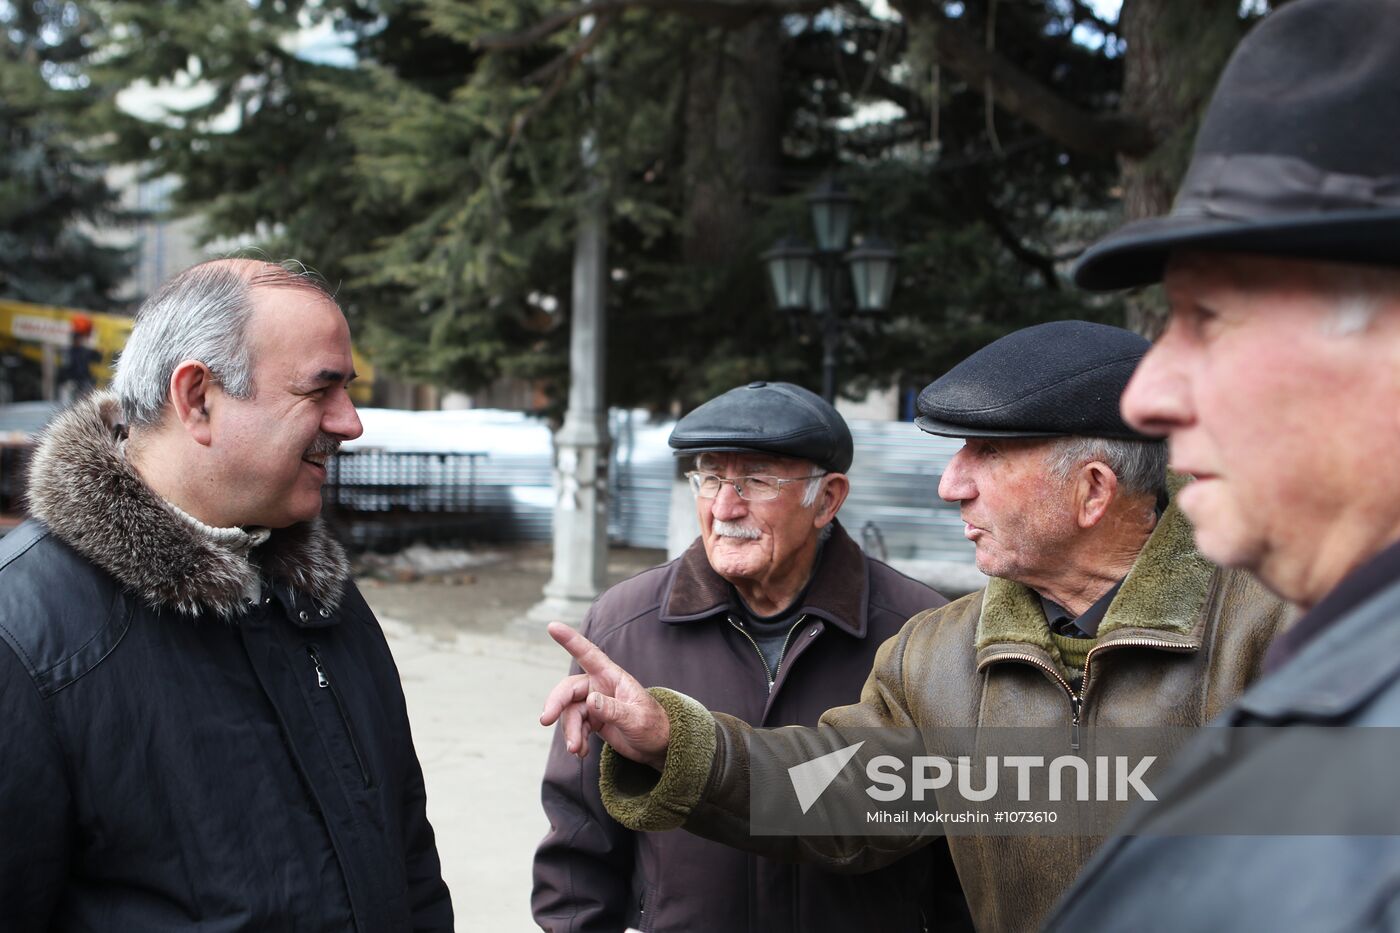 South Ossetia prepares for presidential election